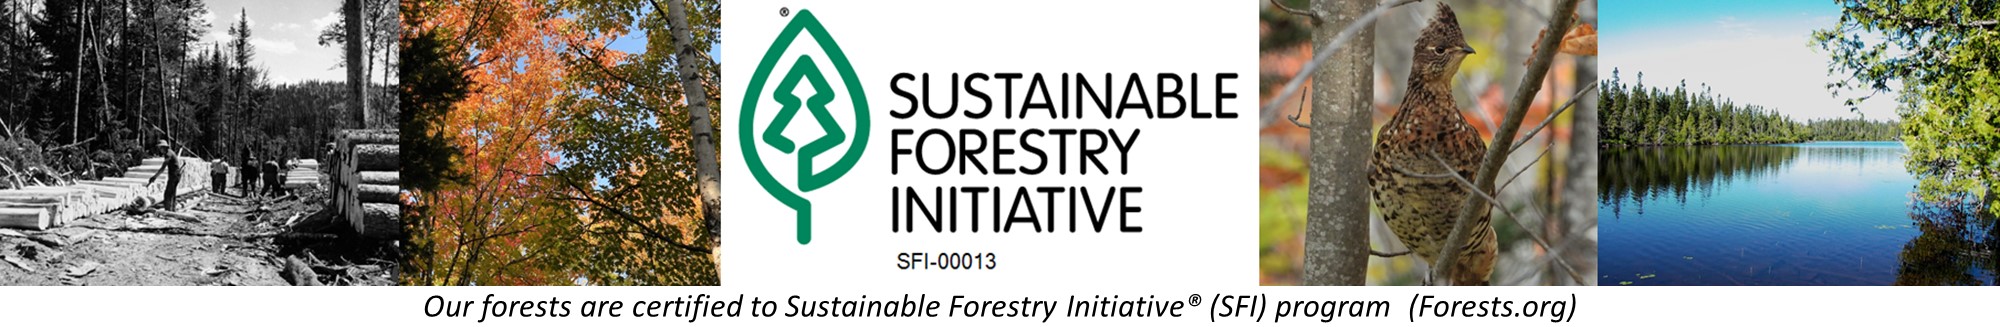 photos of trees, wildlife, lakes, forest operations, SFI® logo